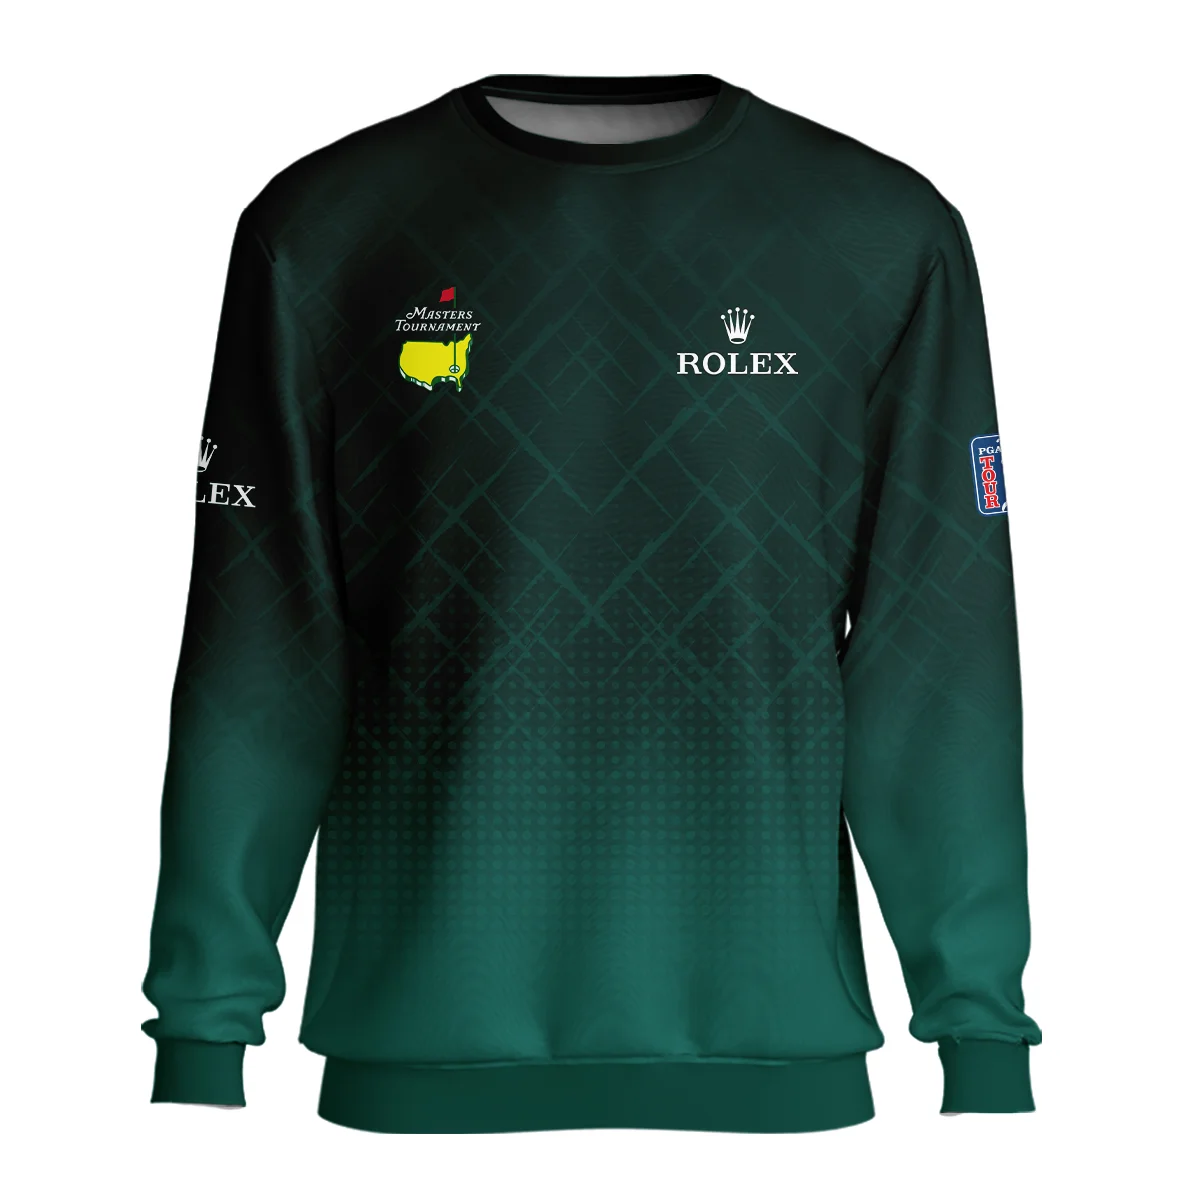 Rolex Masters Tournament Sport Jersey Pattern Dark Green Unisex T-Shirt Style Classic T-Shirt